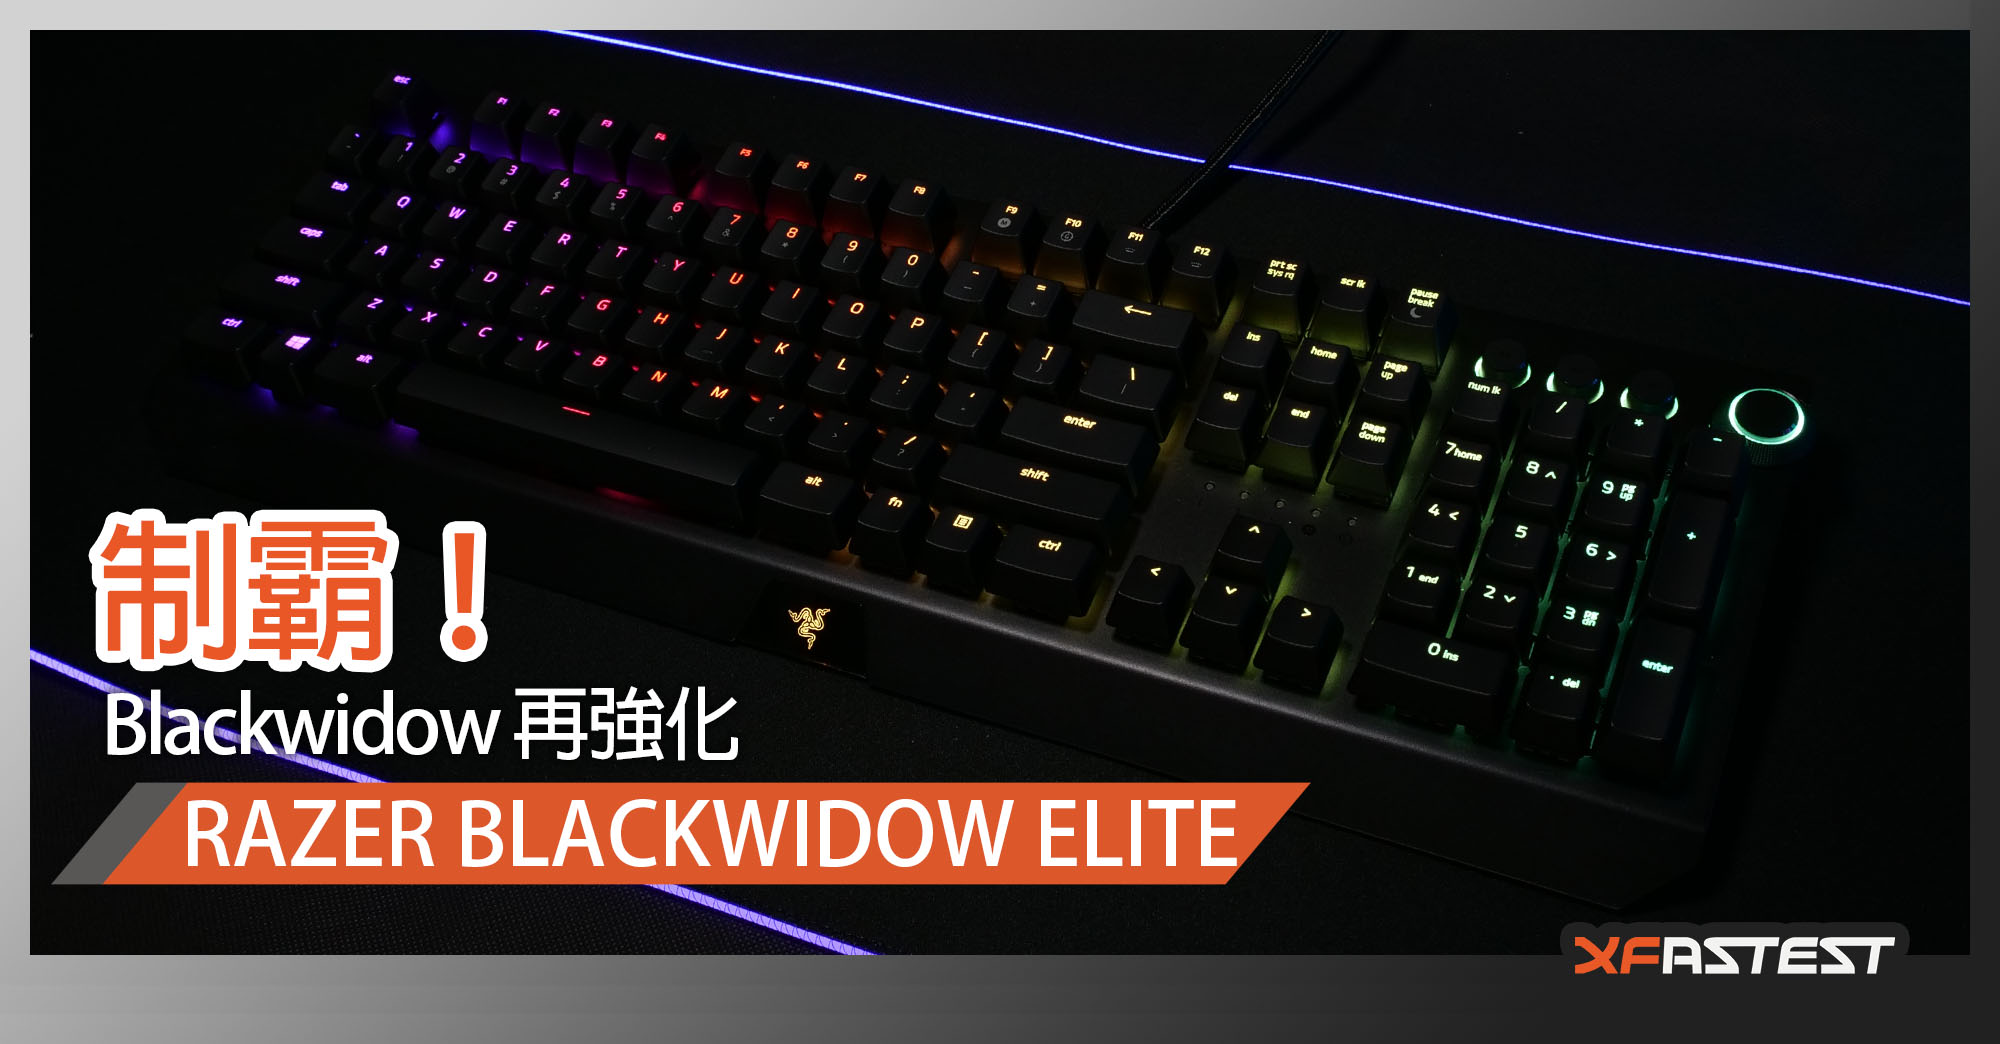 制 霸 Blackwidow 再強化 Razer Blackwidow Elite Xfastest Hong Kong